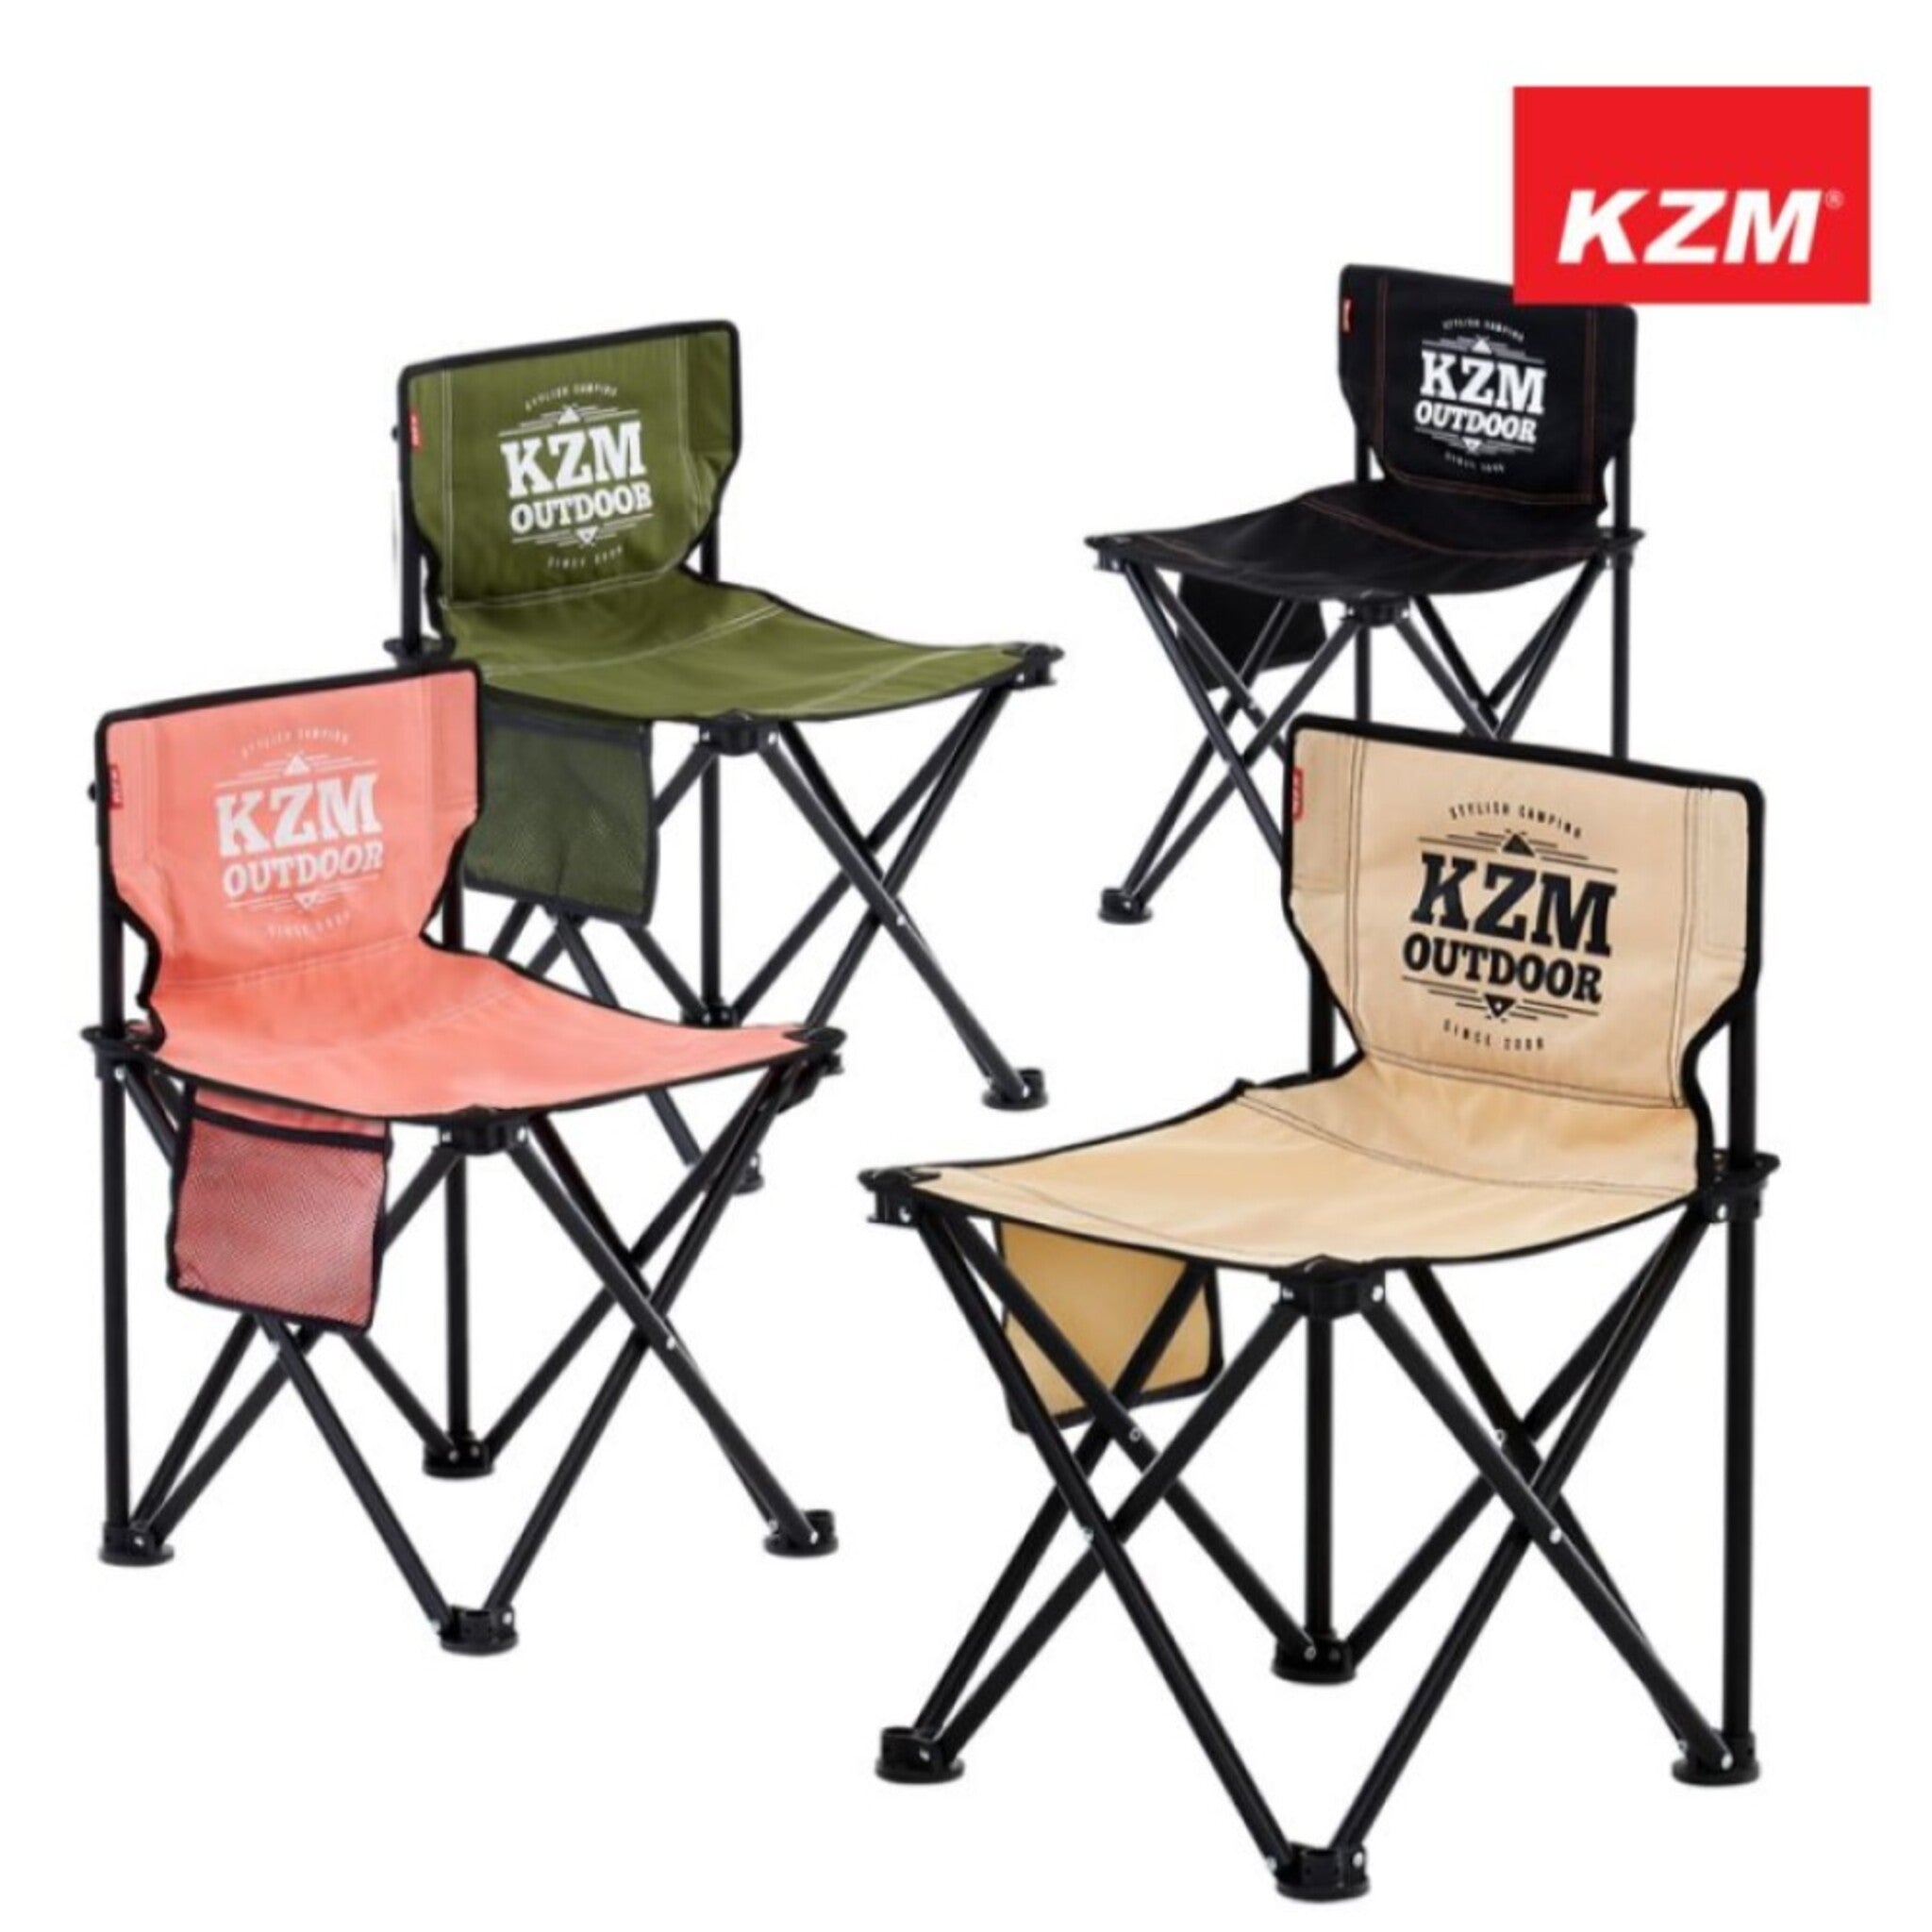 KAZMI KZM 極簡時尚輕巧折疊椅 K9T3C001